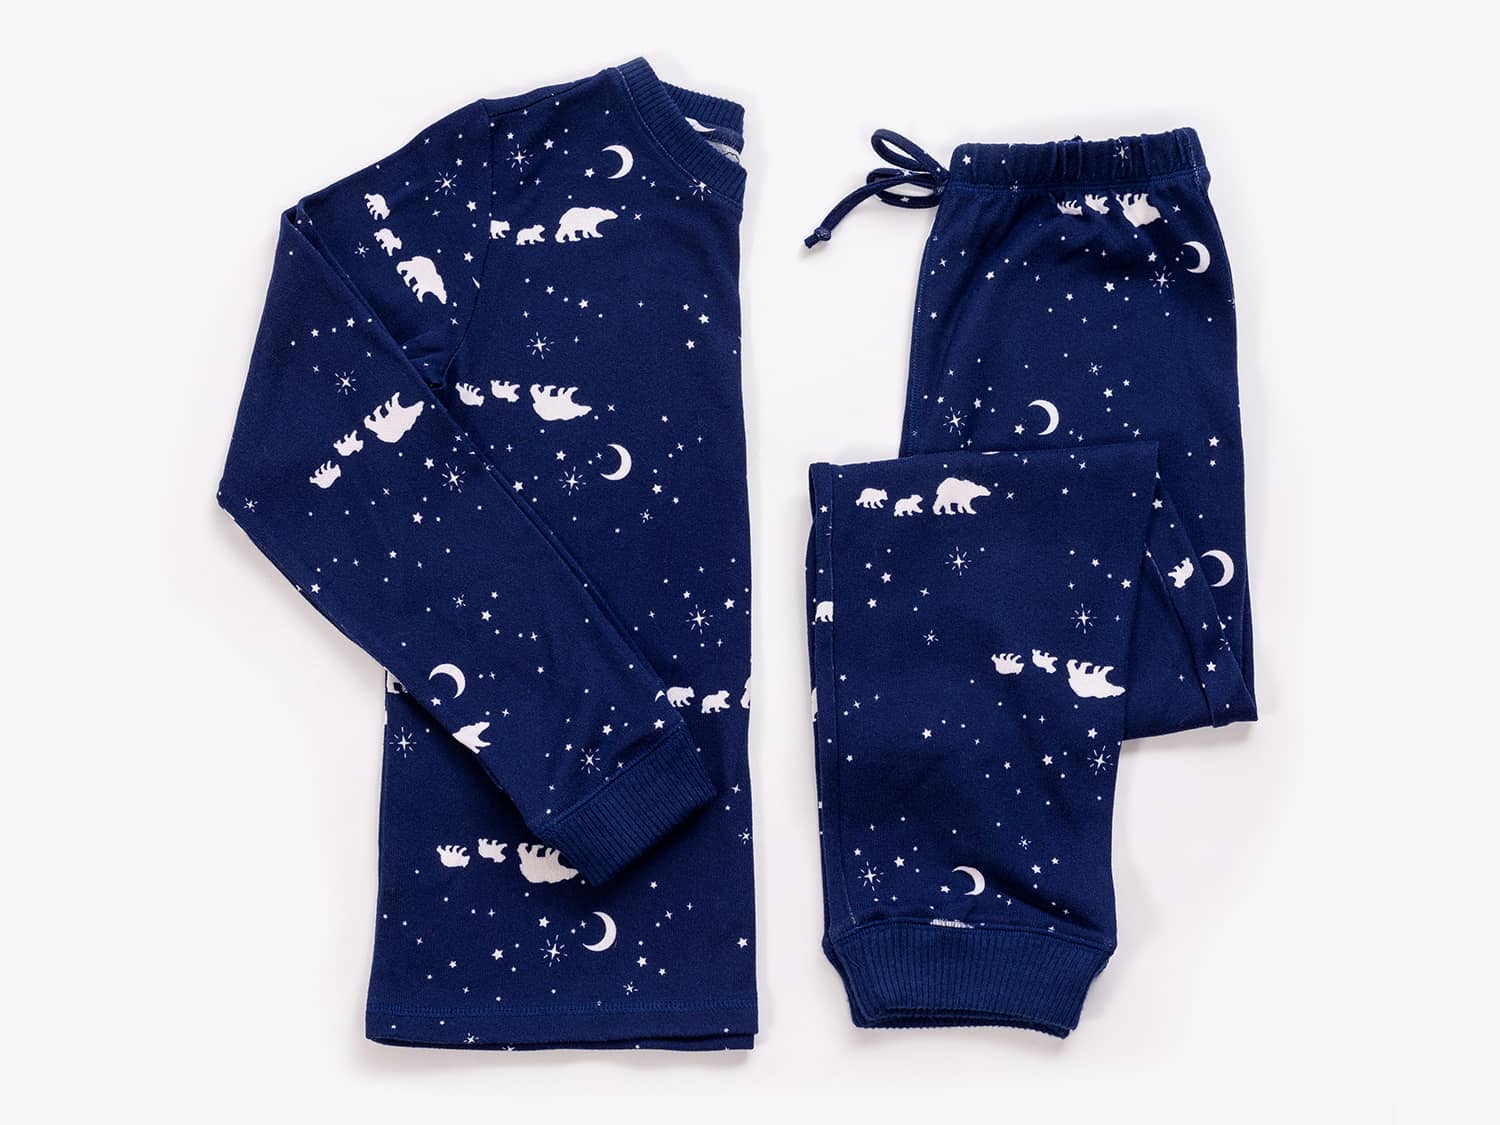 The Black Sheep Fam Kids' Navy Bear Pajama Set